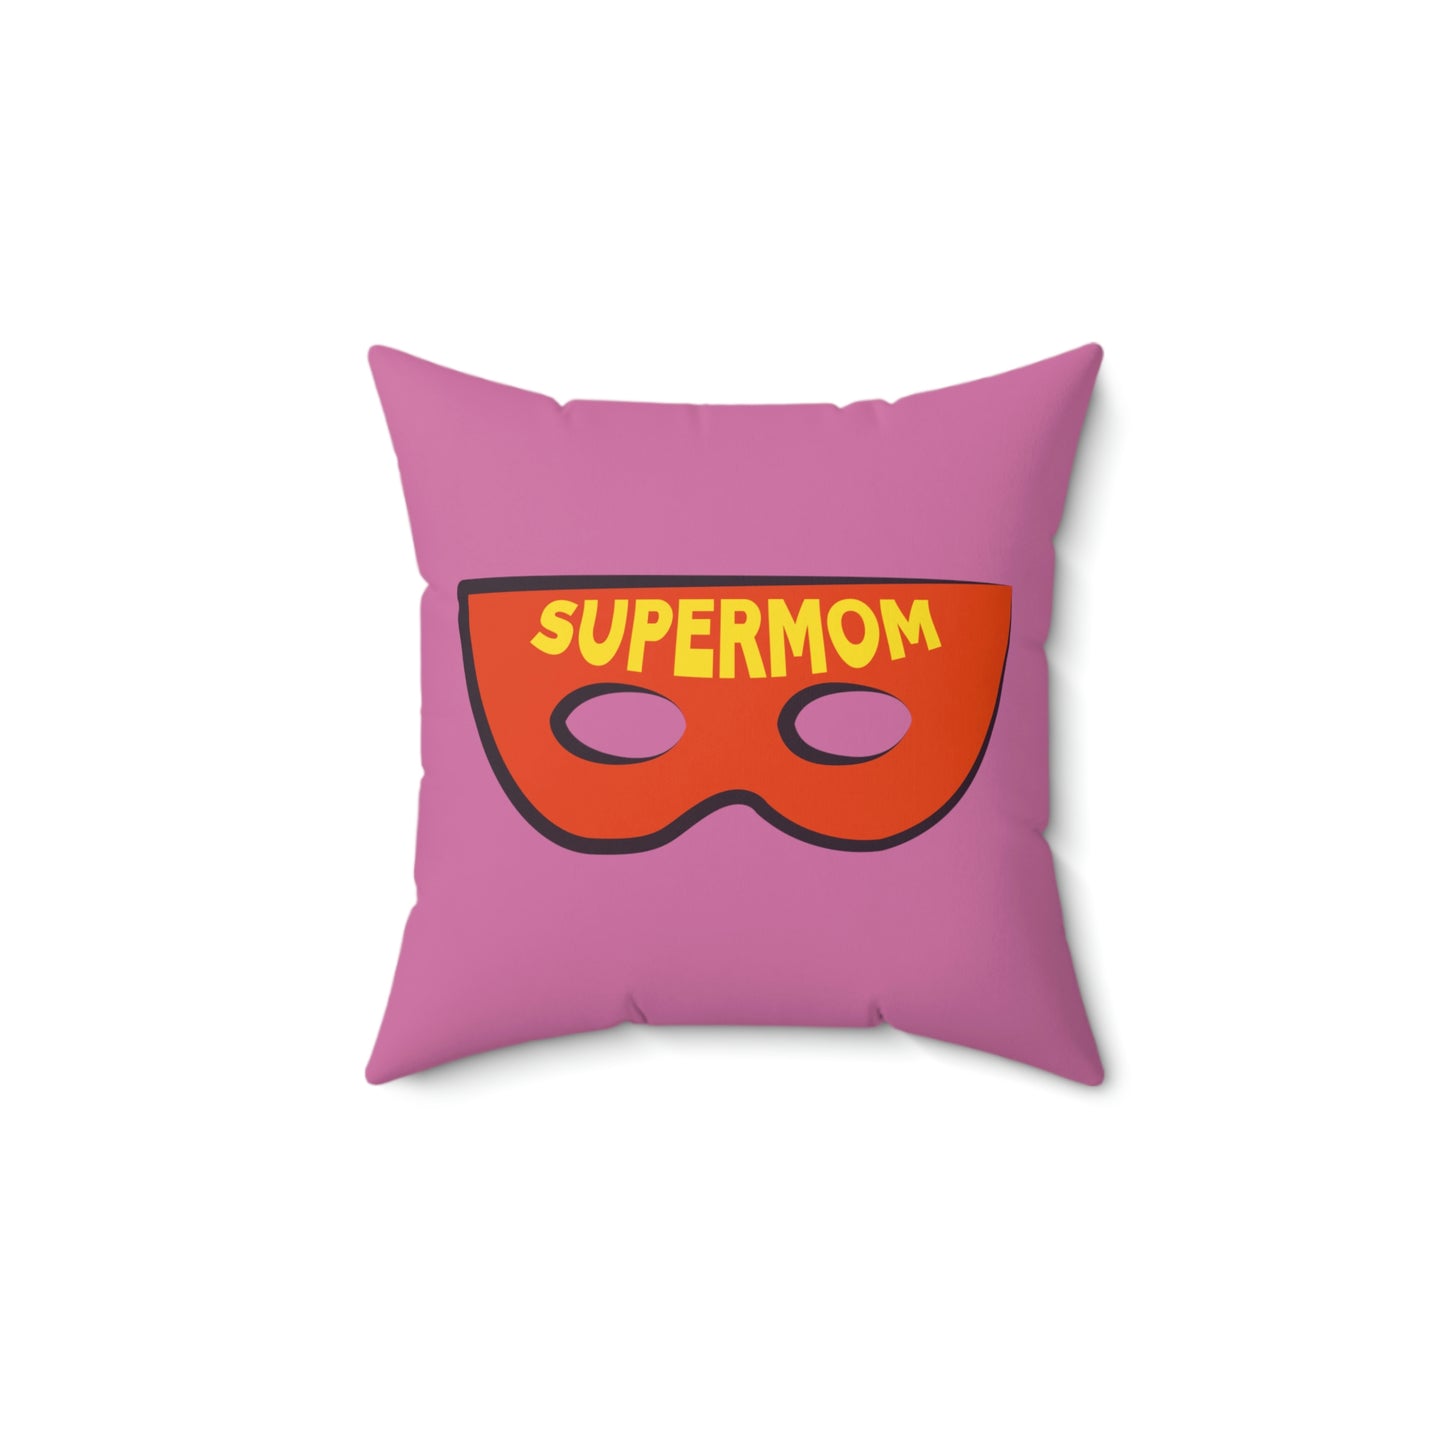 Spun Polyester Square Pillow Case "Super Mom on Light Pink”